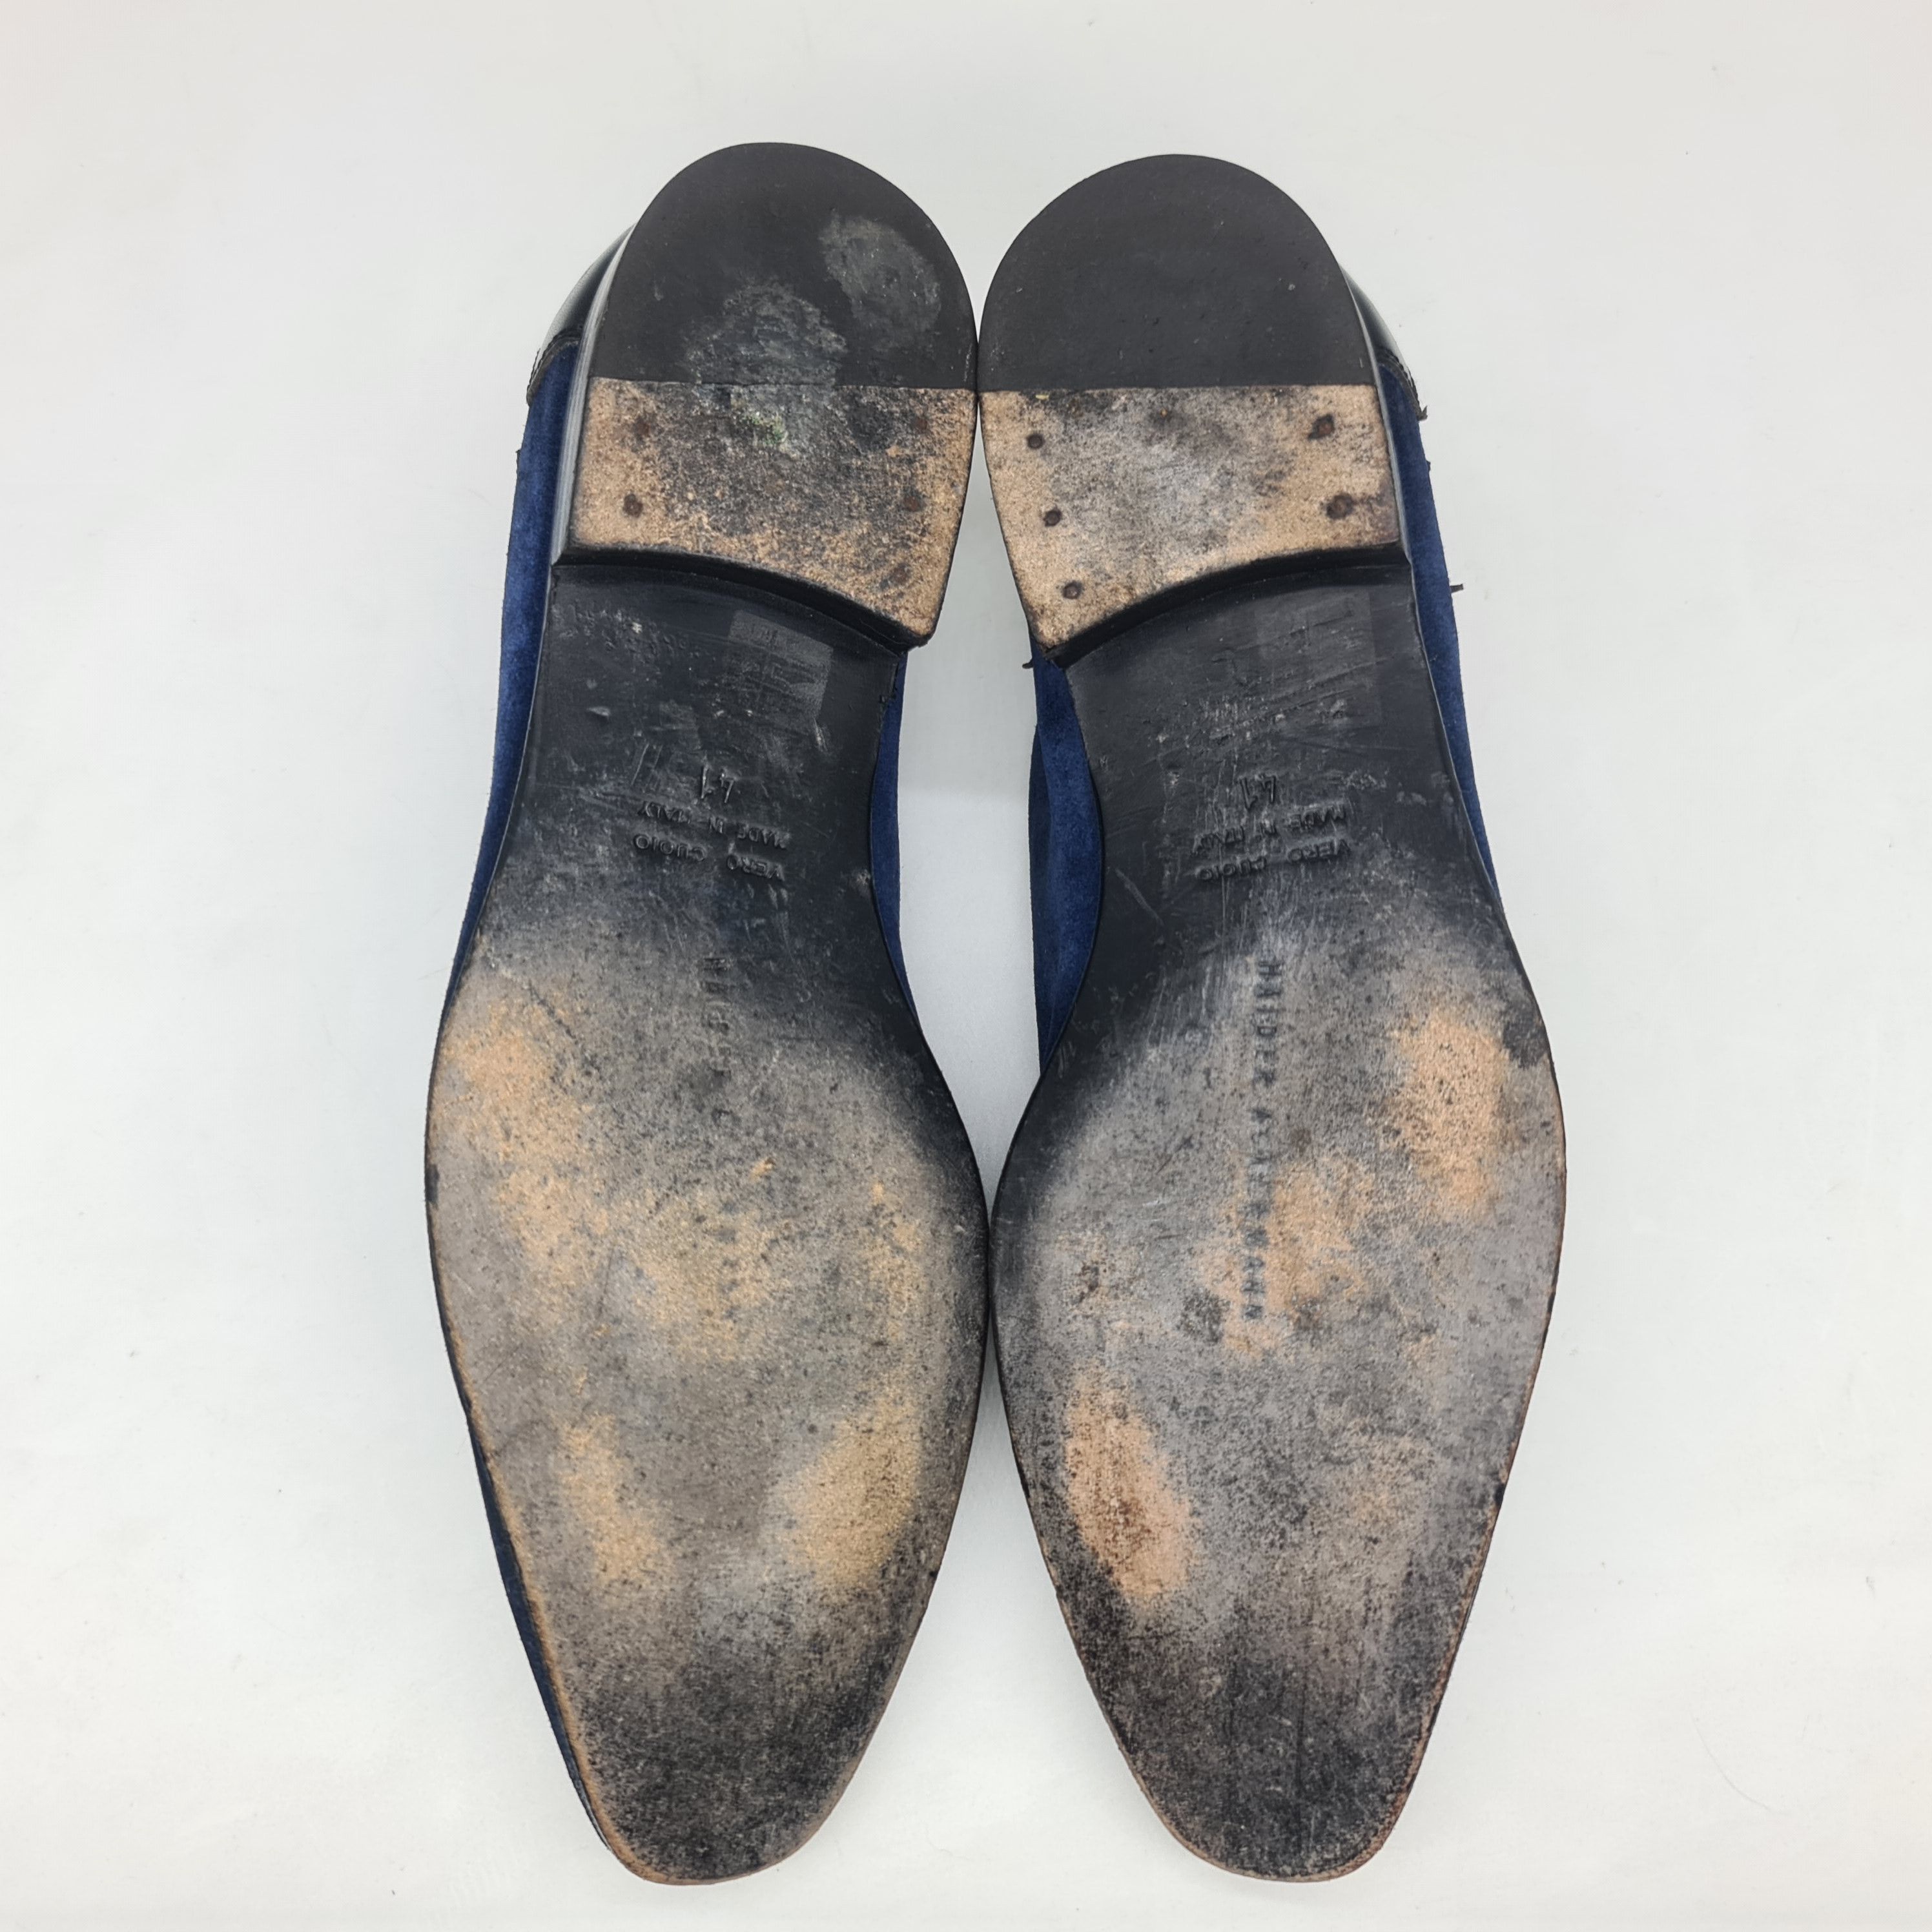 Haider Ackermann - SS16 Runway Blue Suede Oxford Shoes - 7